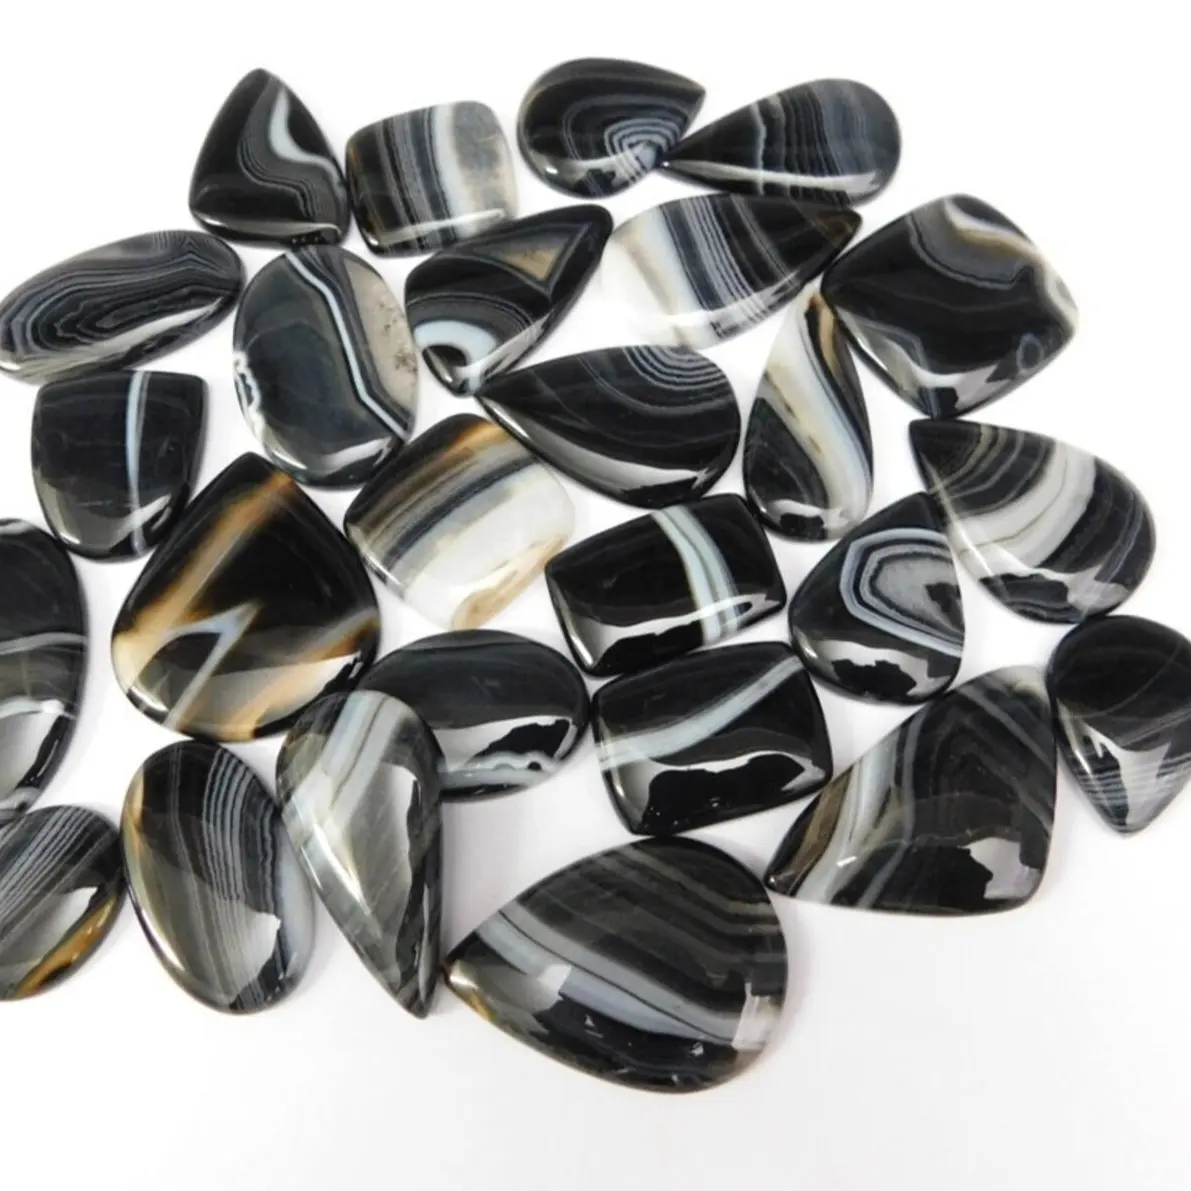 Onyx alami eksklusif Onyx hitam Banded Onyx grosir batu permata Cabochon Banded Onyx banyak untuk membuat perhiasan kualitas terbaik tersedia